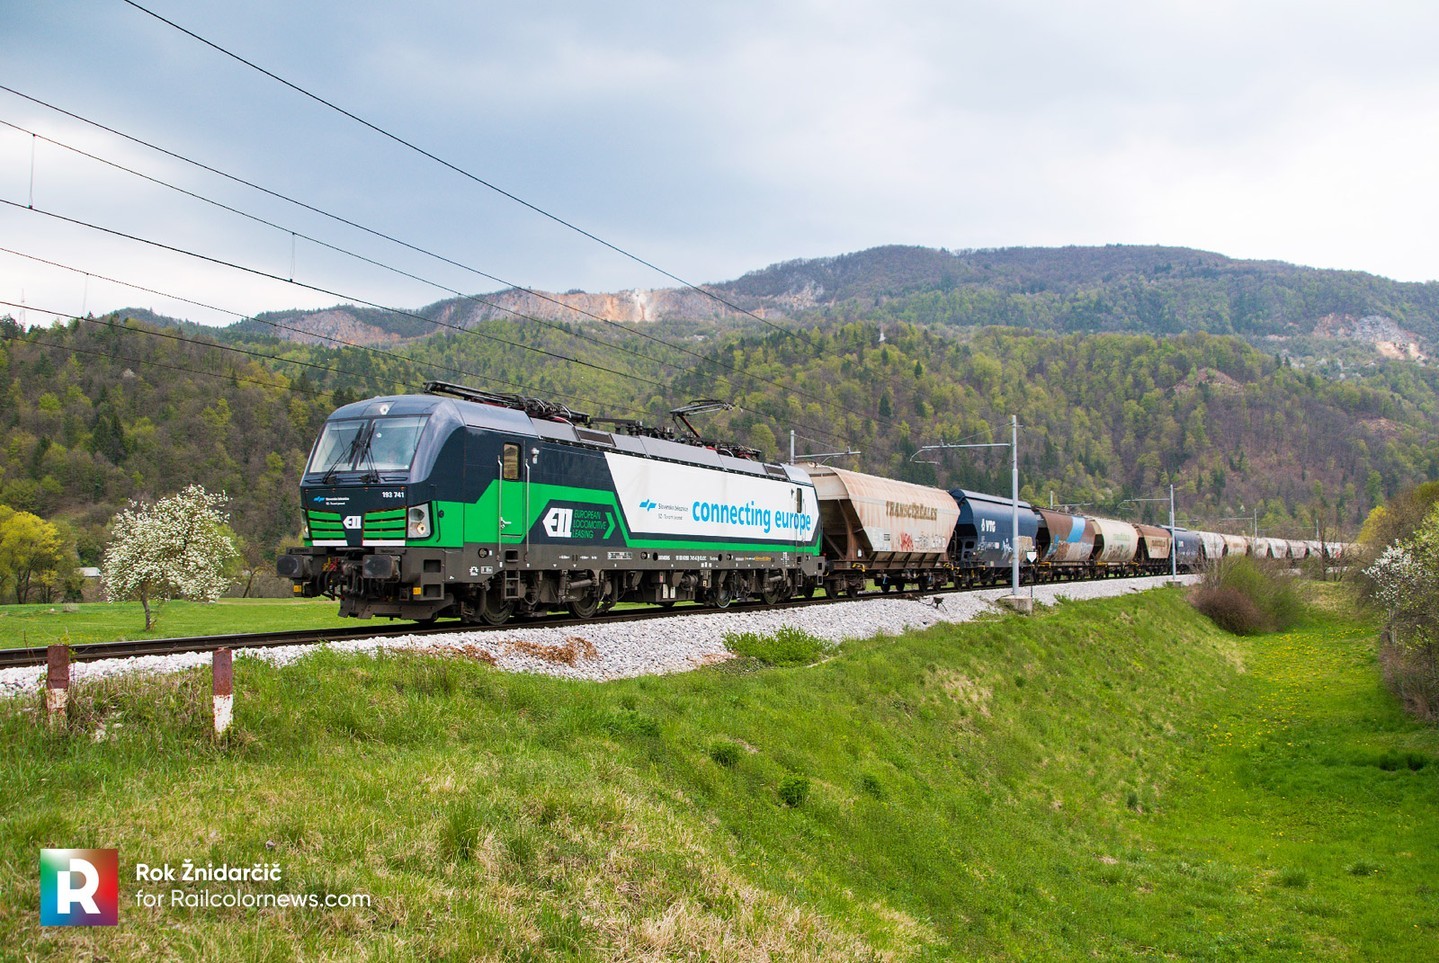 📷 by Rok Žnidarčič 🇸🇮 Extra locomotives for SŽ-TP: Vectrons from ELL and Metrans ⬆️ Read more, visit RailcolorNews.com
.
.
.
.
.
#SZTP #EuropeanLocomotiveLeasing #ELL #SŽtovornipromet #Siemens #Vectron #br193 #SiemensVectron #ellok #ELLVectron #electriclocomotive #railways #railways_of_europe #eisenbahnfotografie #railwayphotography #railcolornews #vlak #vlakovi #SŽTP #connectingeurope #193741 #metrans #metransvectron #slovenskeželeznice #sž #slovenskezeleznice